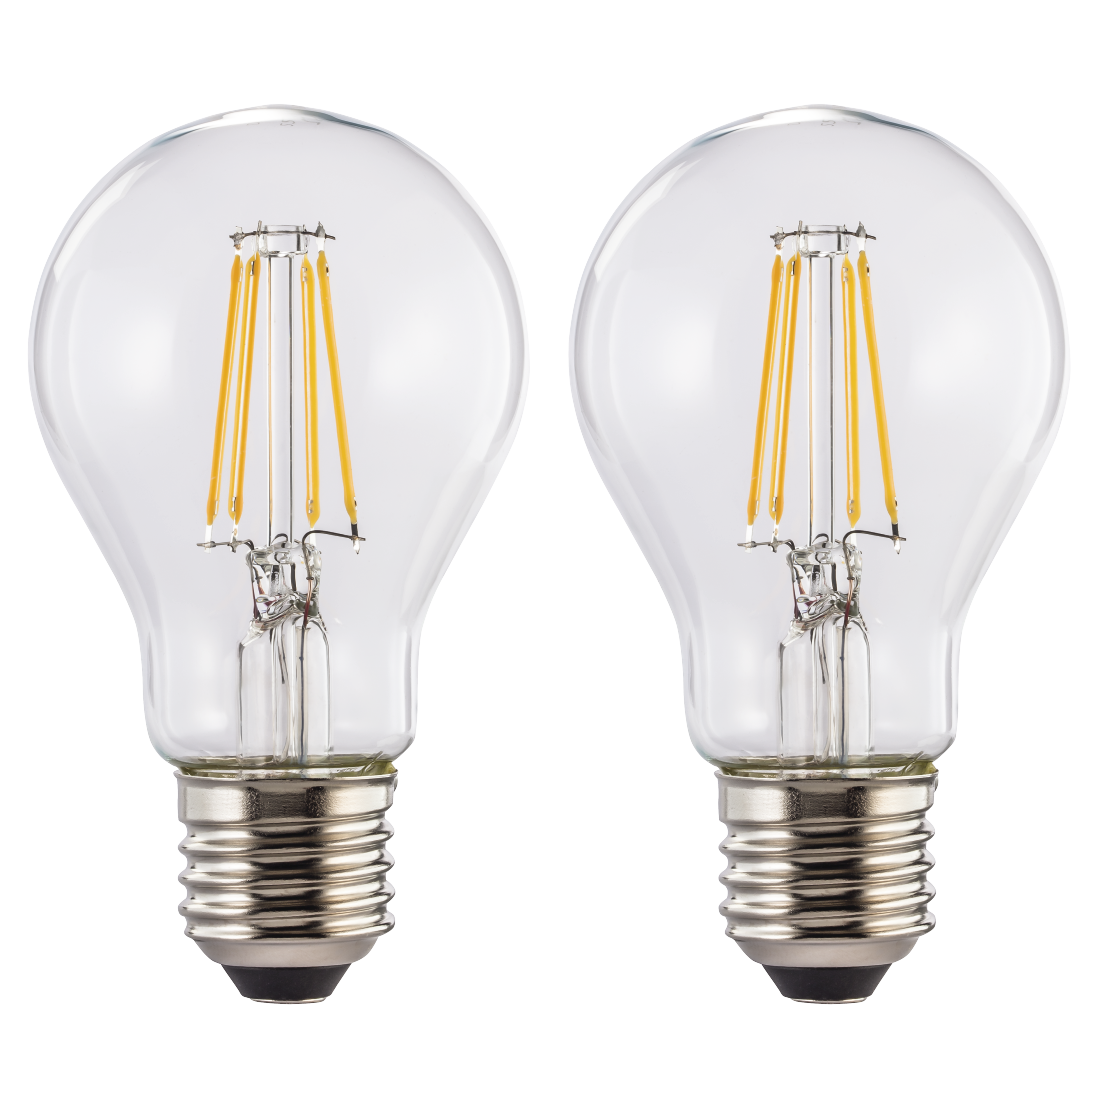 abx High-Res Image - Xavax, LED Filament, E27, 806 lm Replaces 60W, Incand. Bulb, warm white, 2 pcs